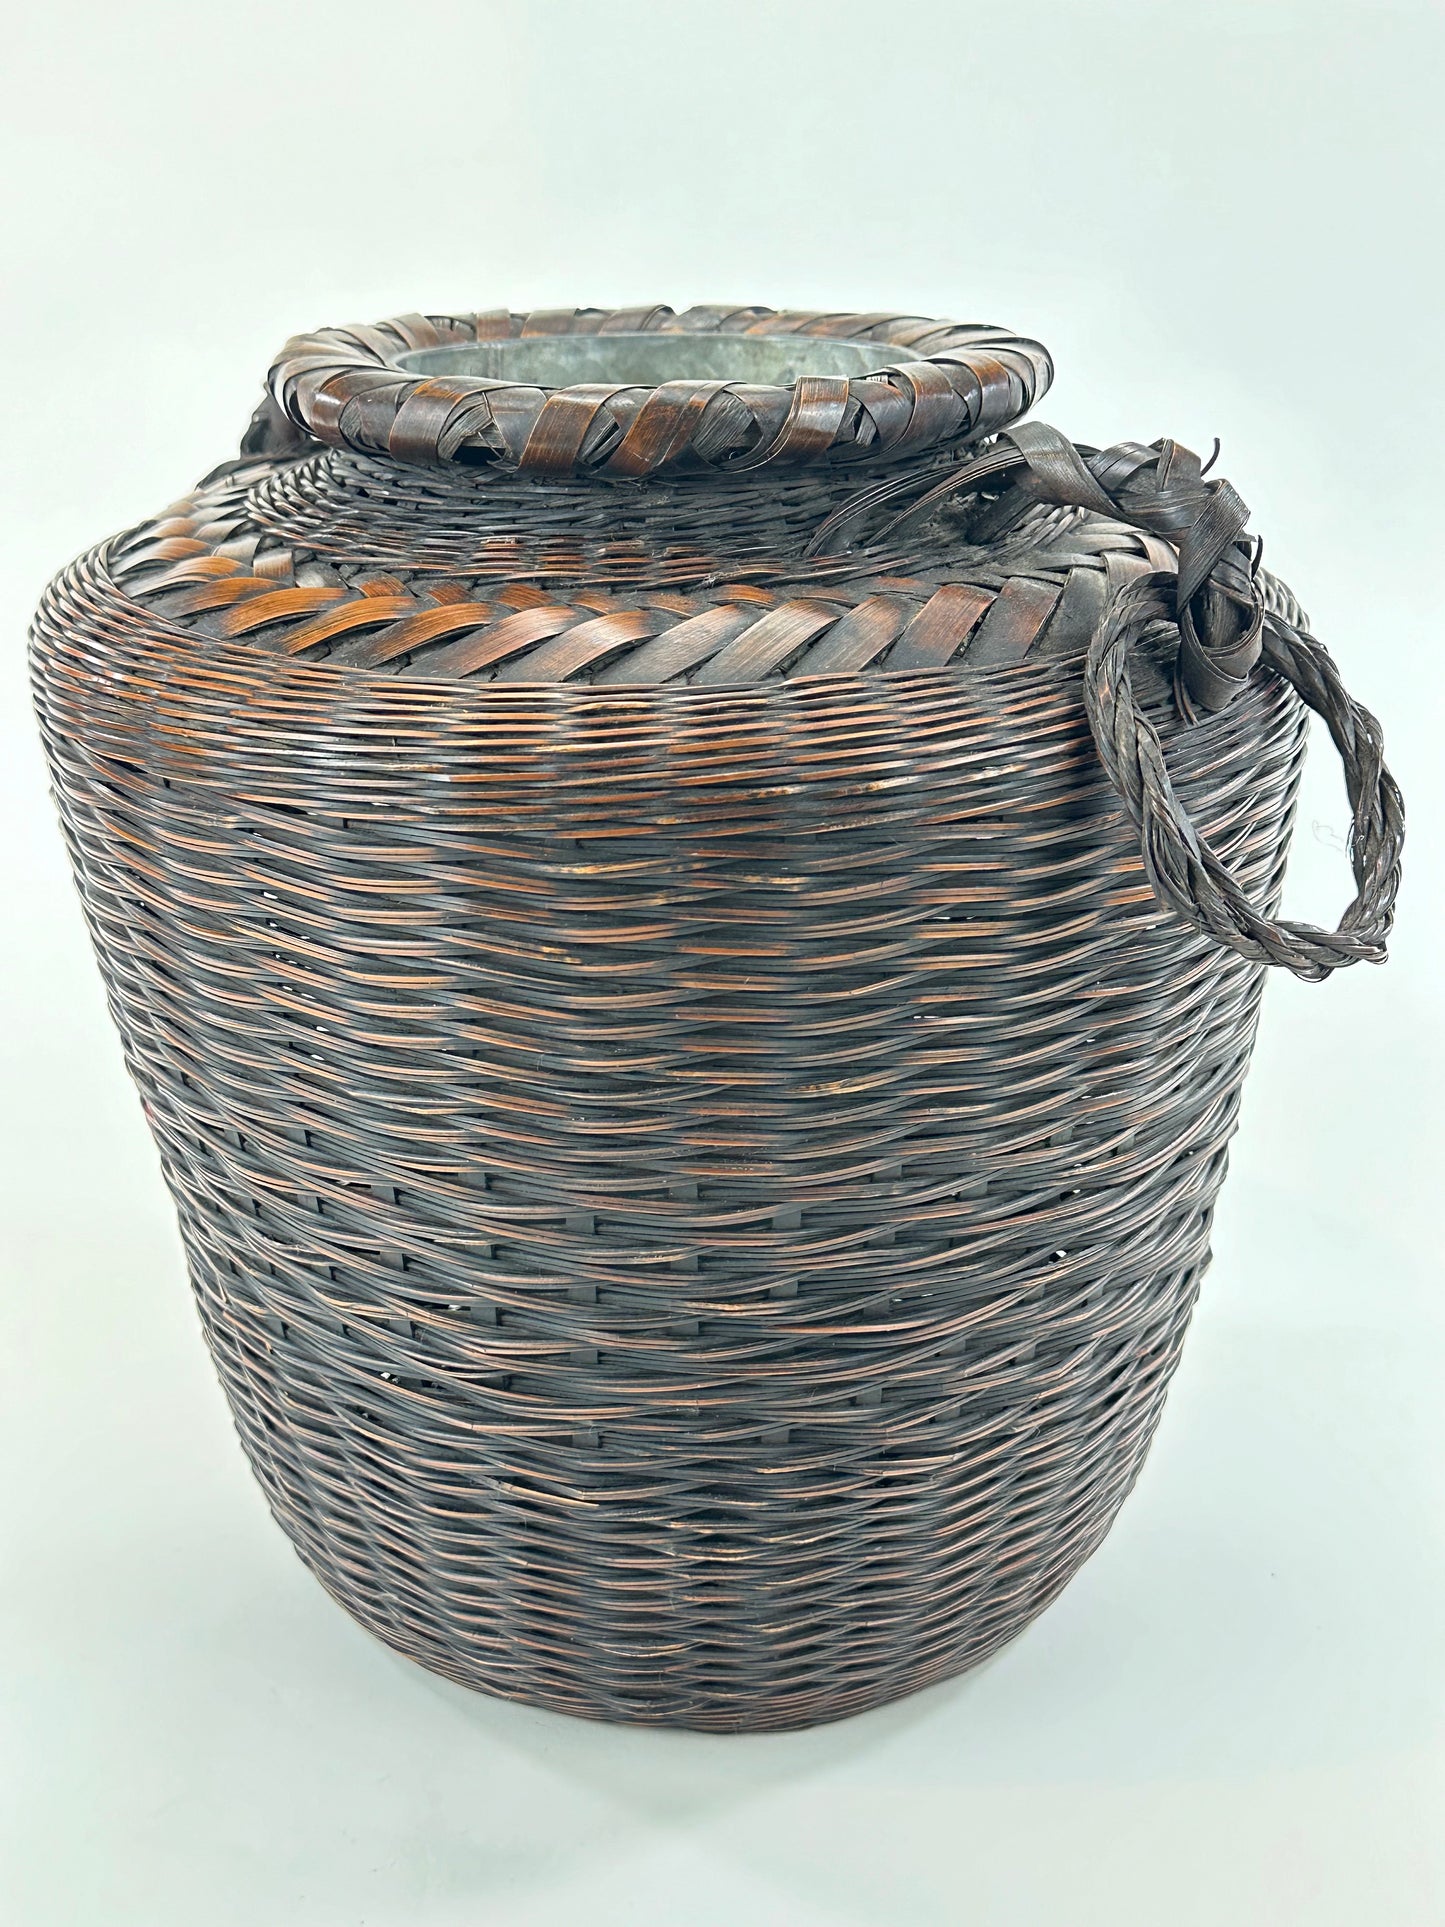 Antique Japanese Ikebana Basket w/ Metal Water Container 11"